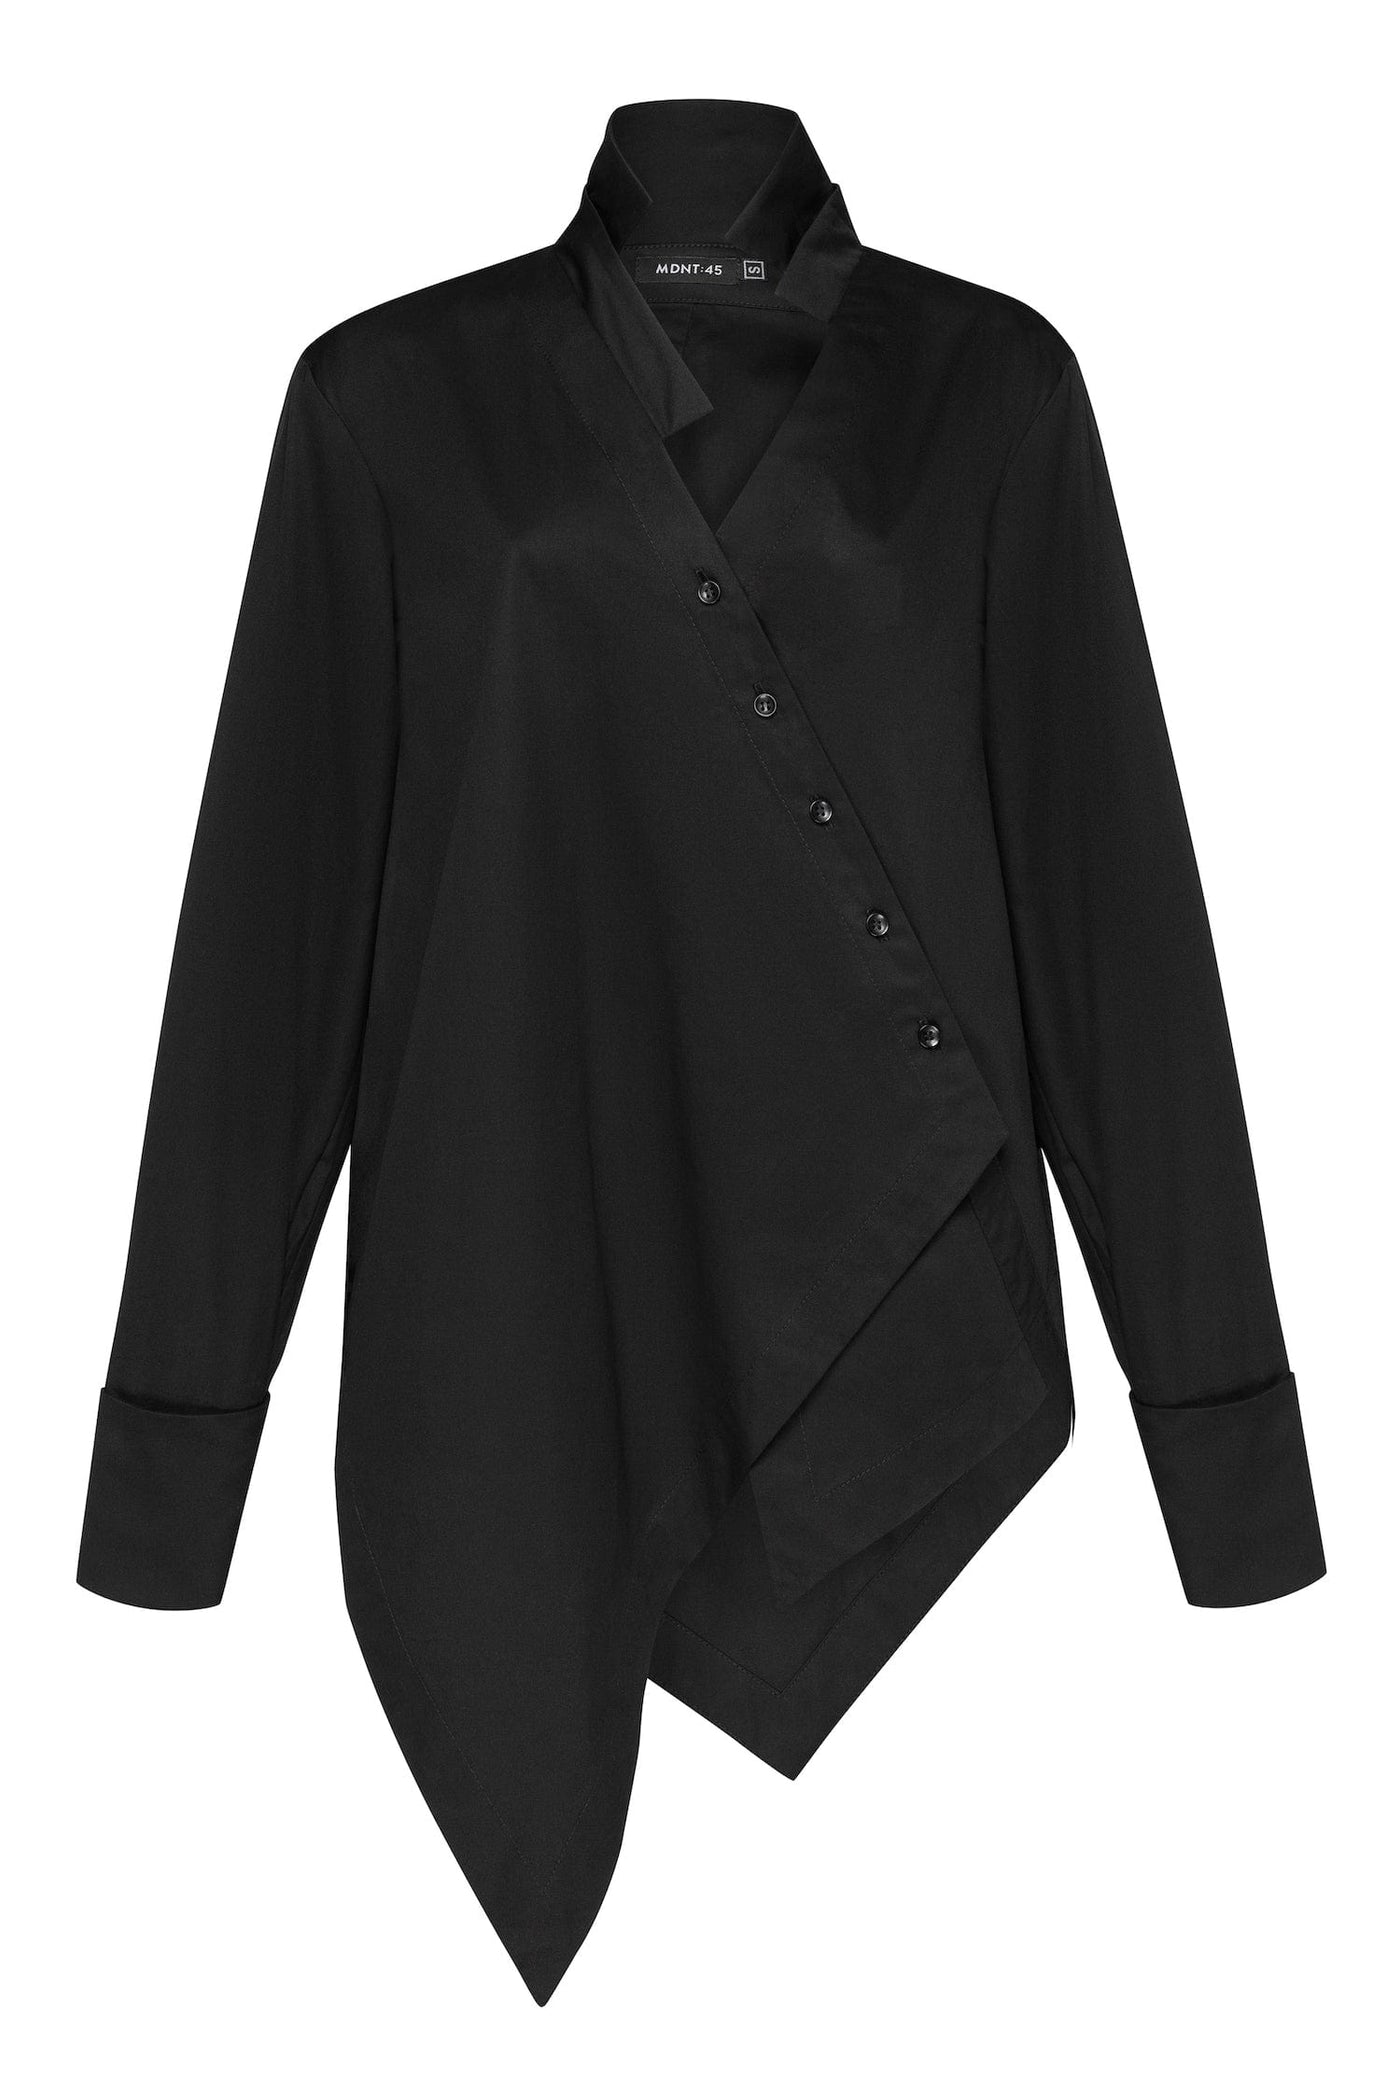 Eteru Shirt Black – MDNT45 | mdnt45.com